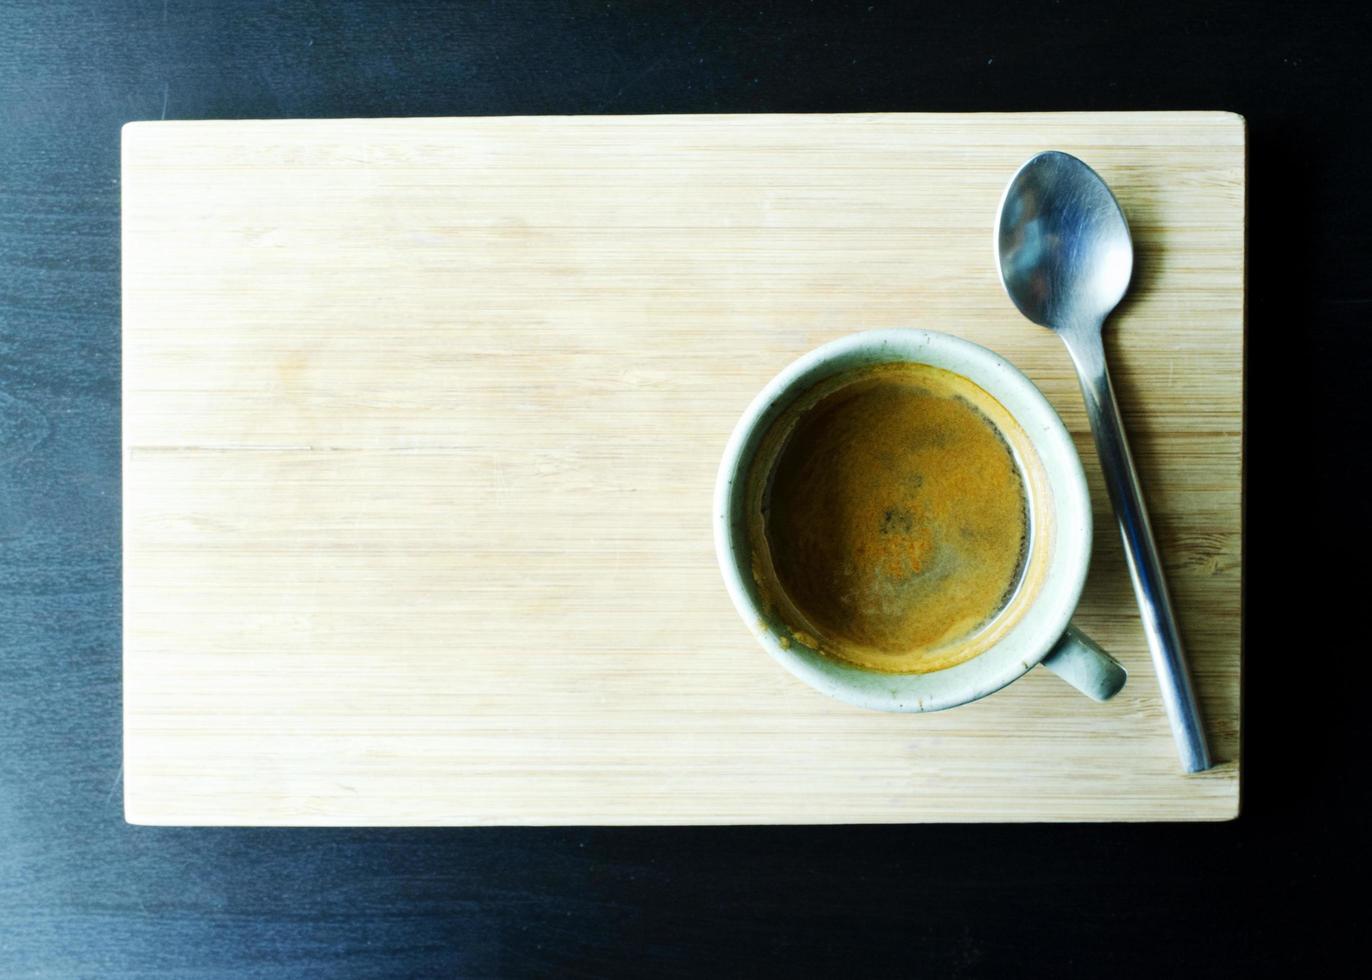 tazze di caffè calde e cucchiaio su sfondi di piatti di legno sopra foto